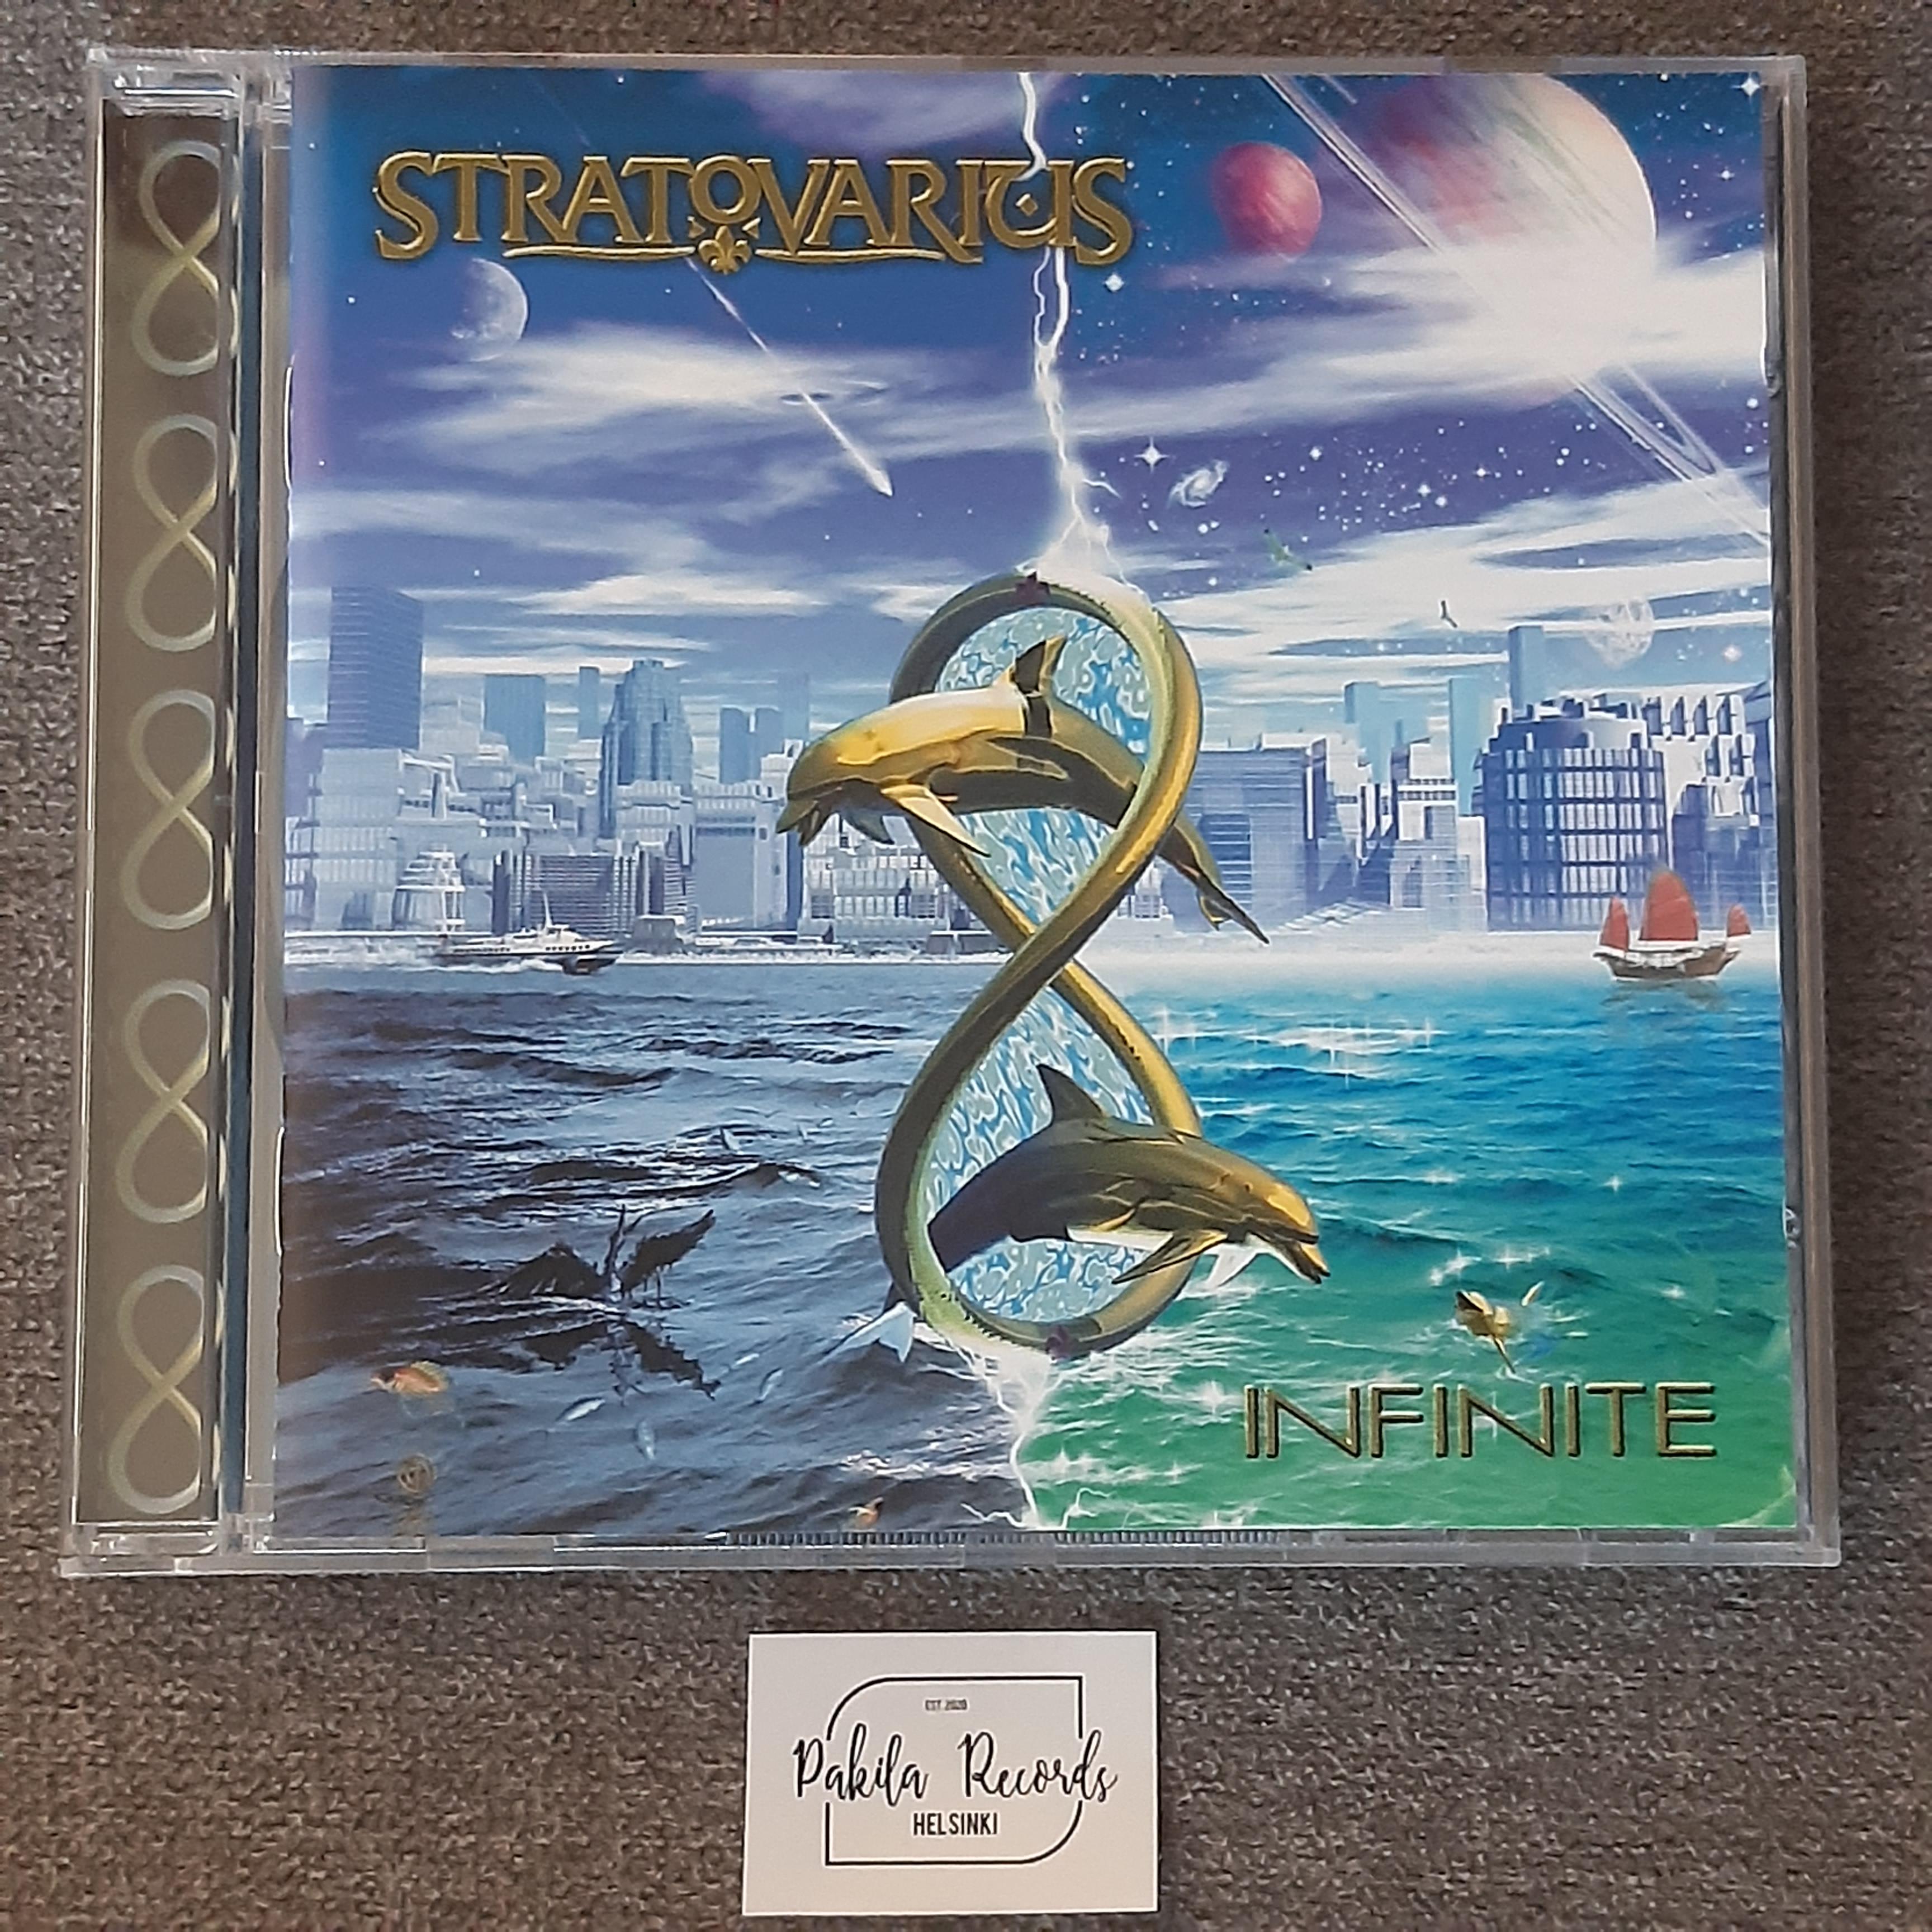 Stratovarius - Infinite - CD (käytetty)